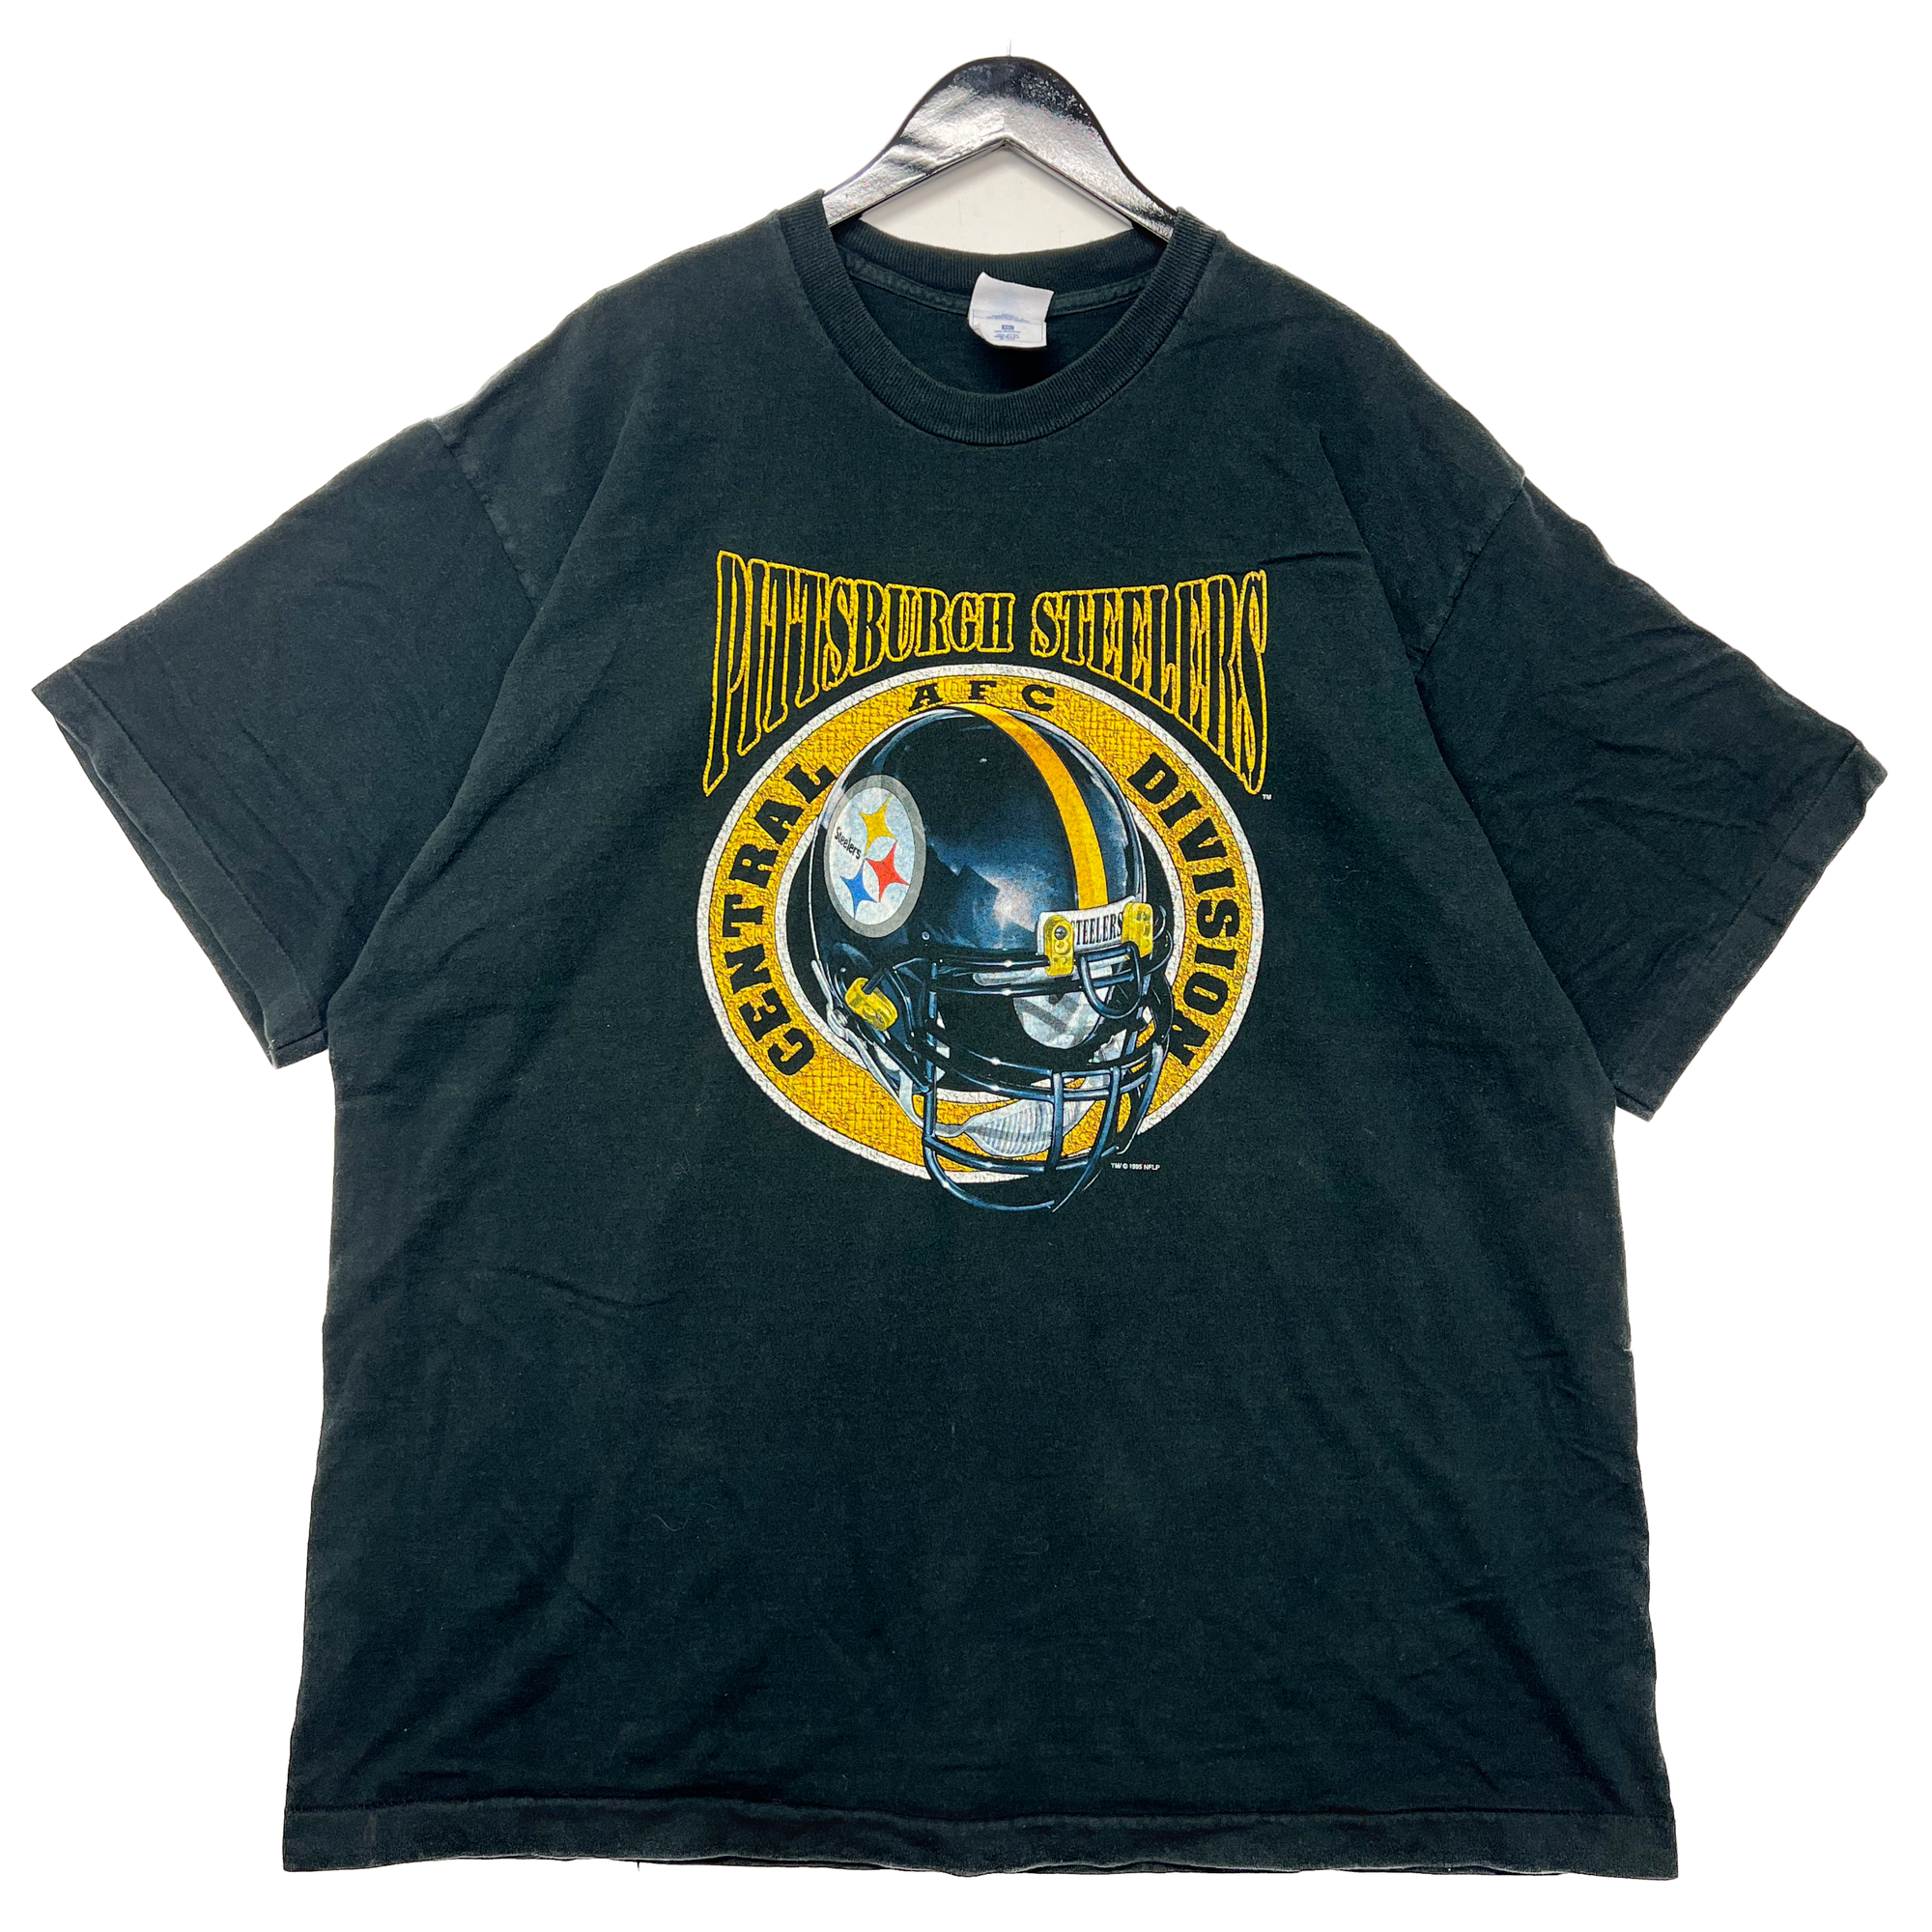 NFL Steelers T-shirt Size 2XL